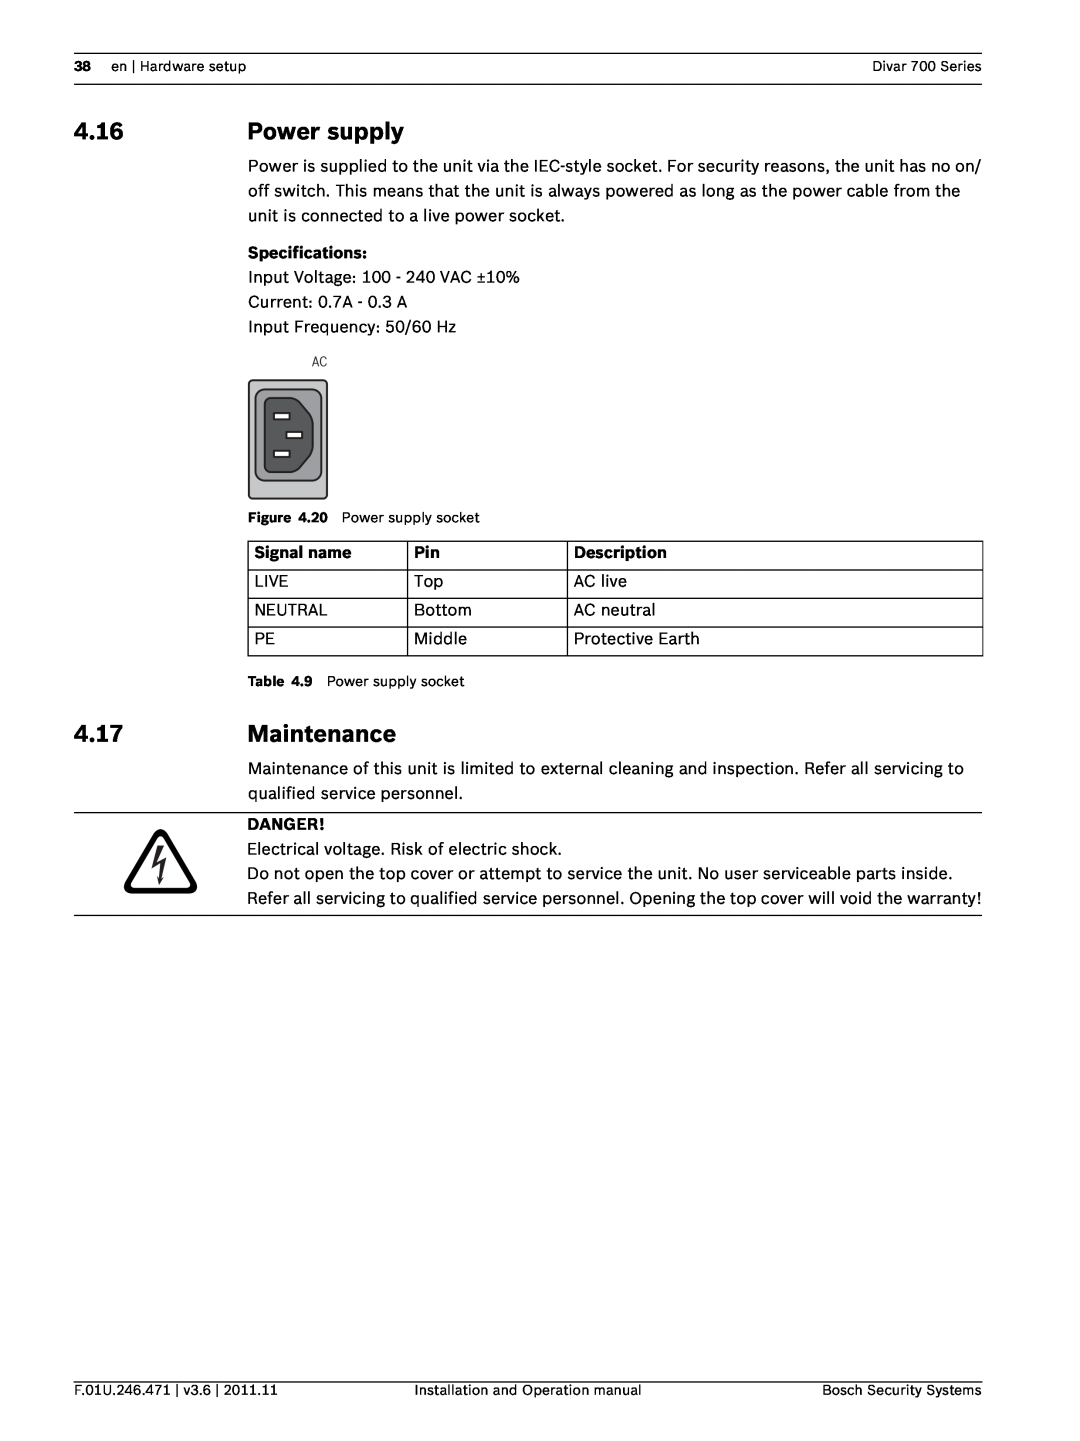 Bosch Appliances 700 operation manual 4.16Power supply, 4.17Maintenance, Specifications, Signal name, Description, Danger 